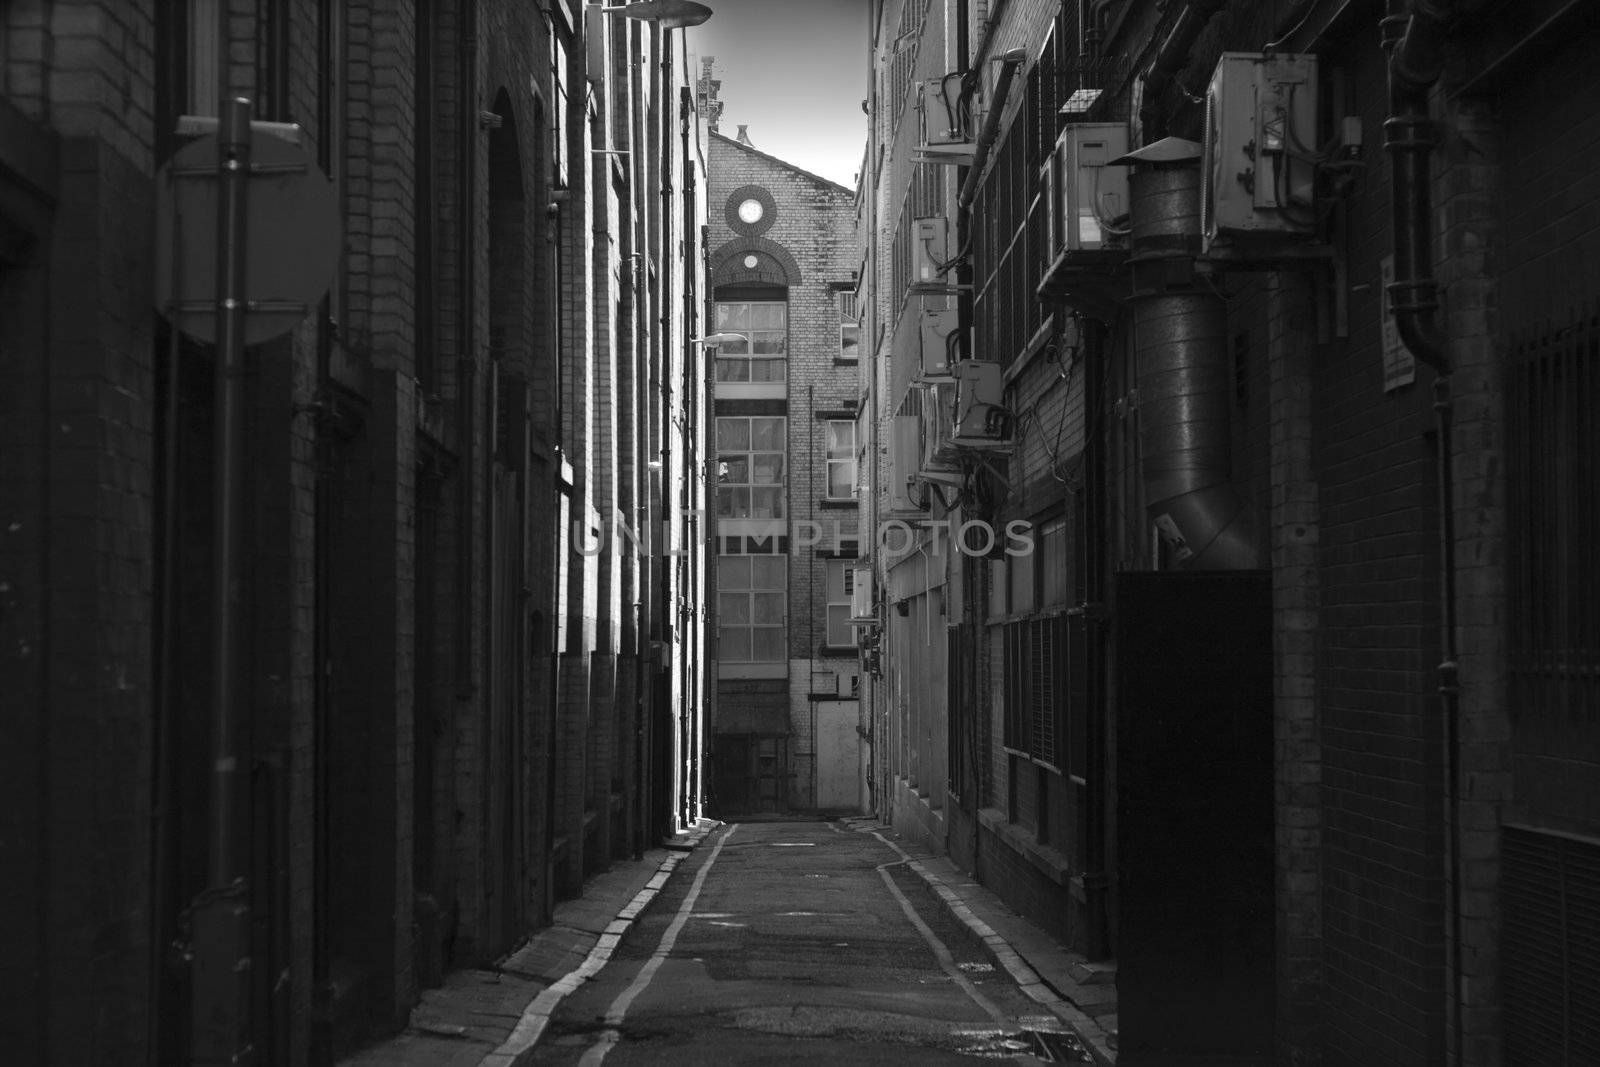 Looking down a long dark back alley by illu